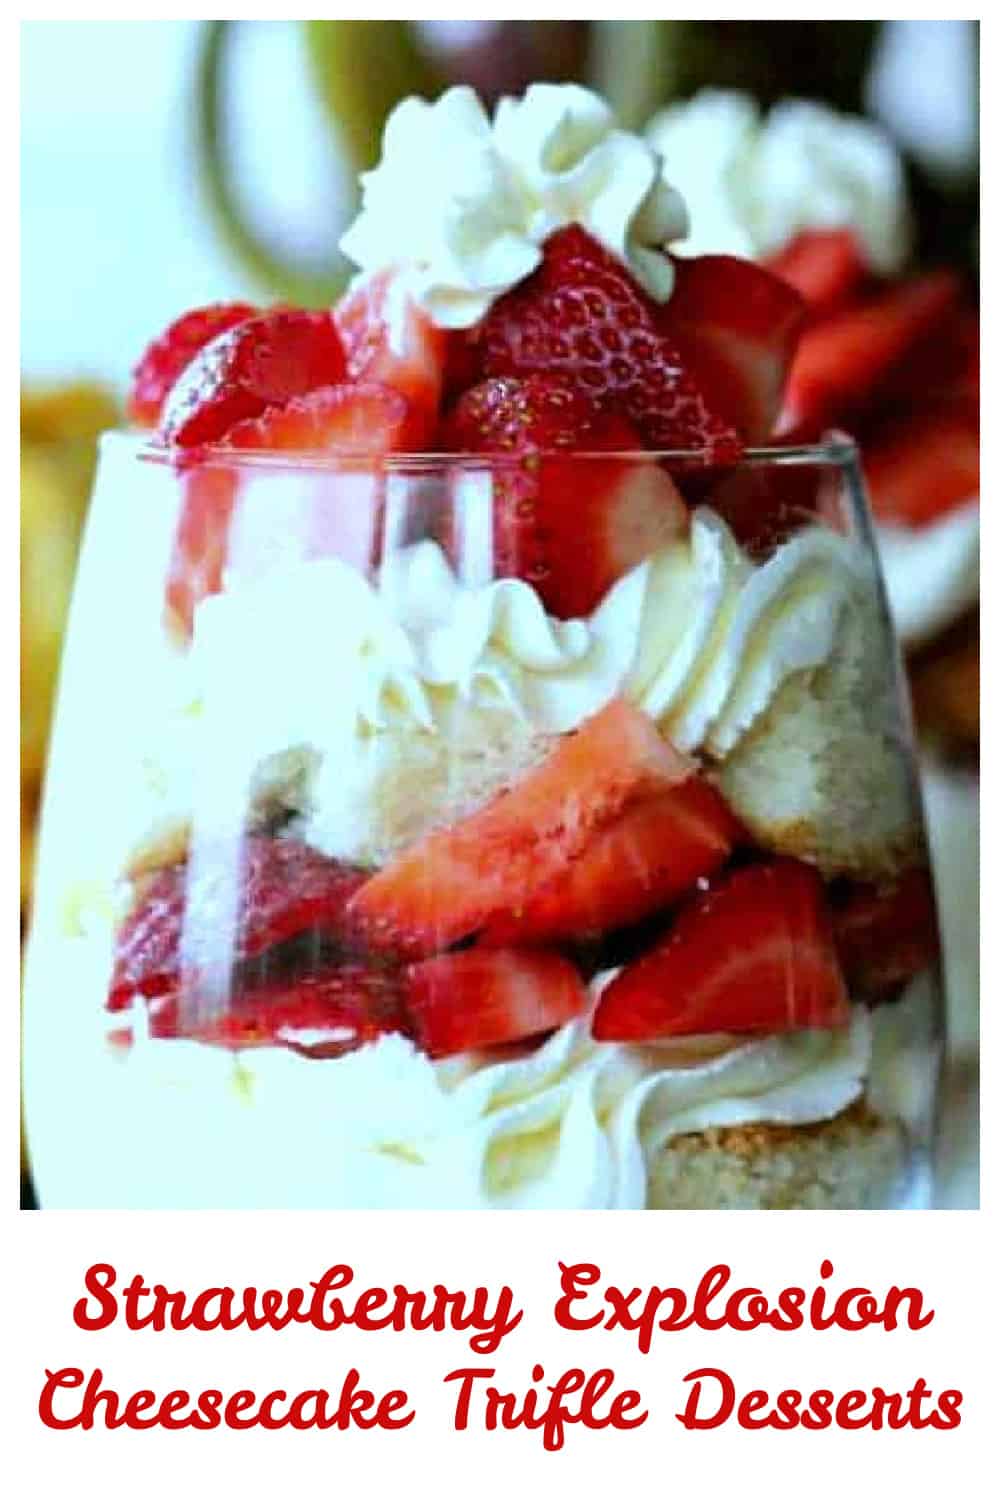 Strawberry Explosion Cheesecake Trifle Desserts - layered pudding dessert recipes